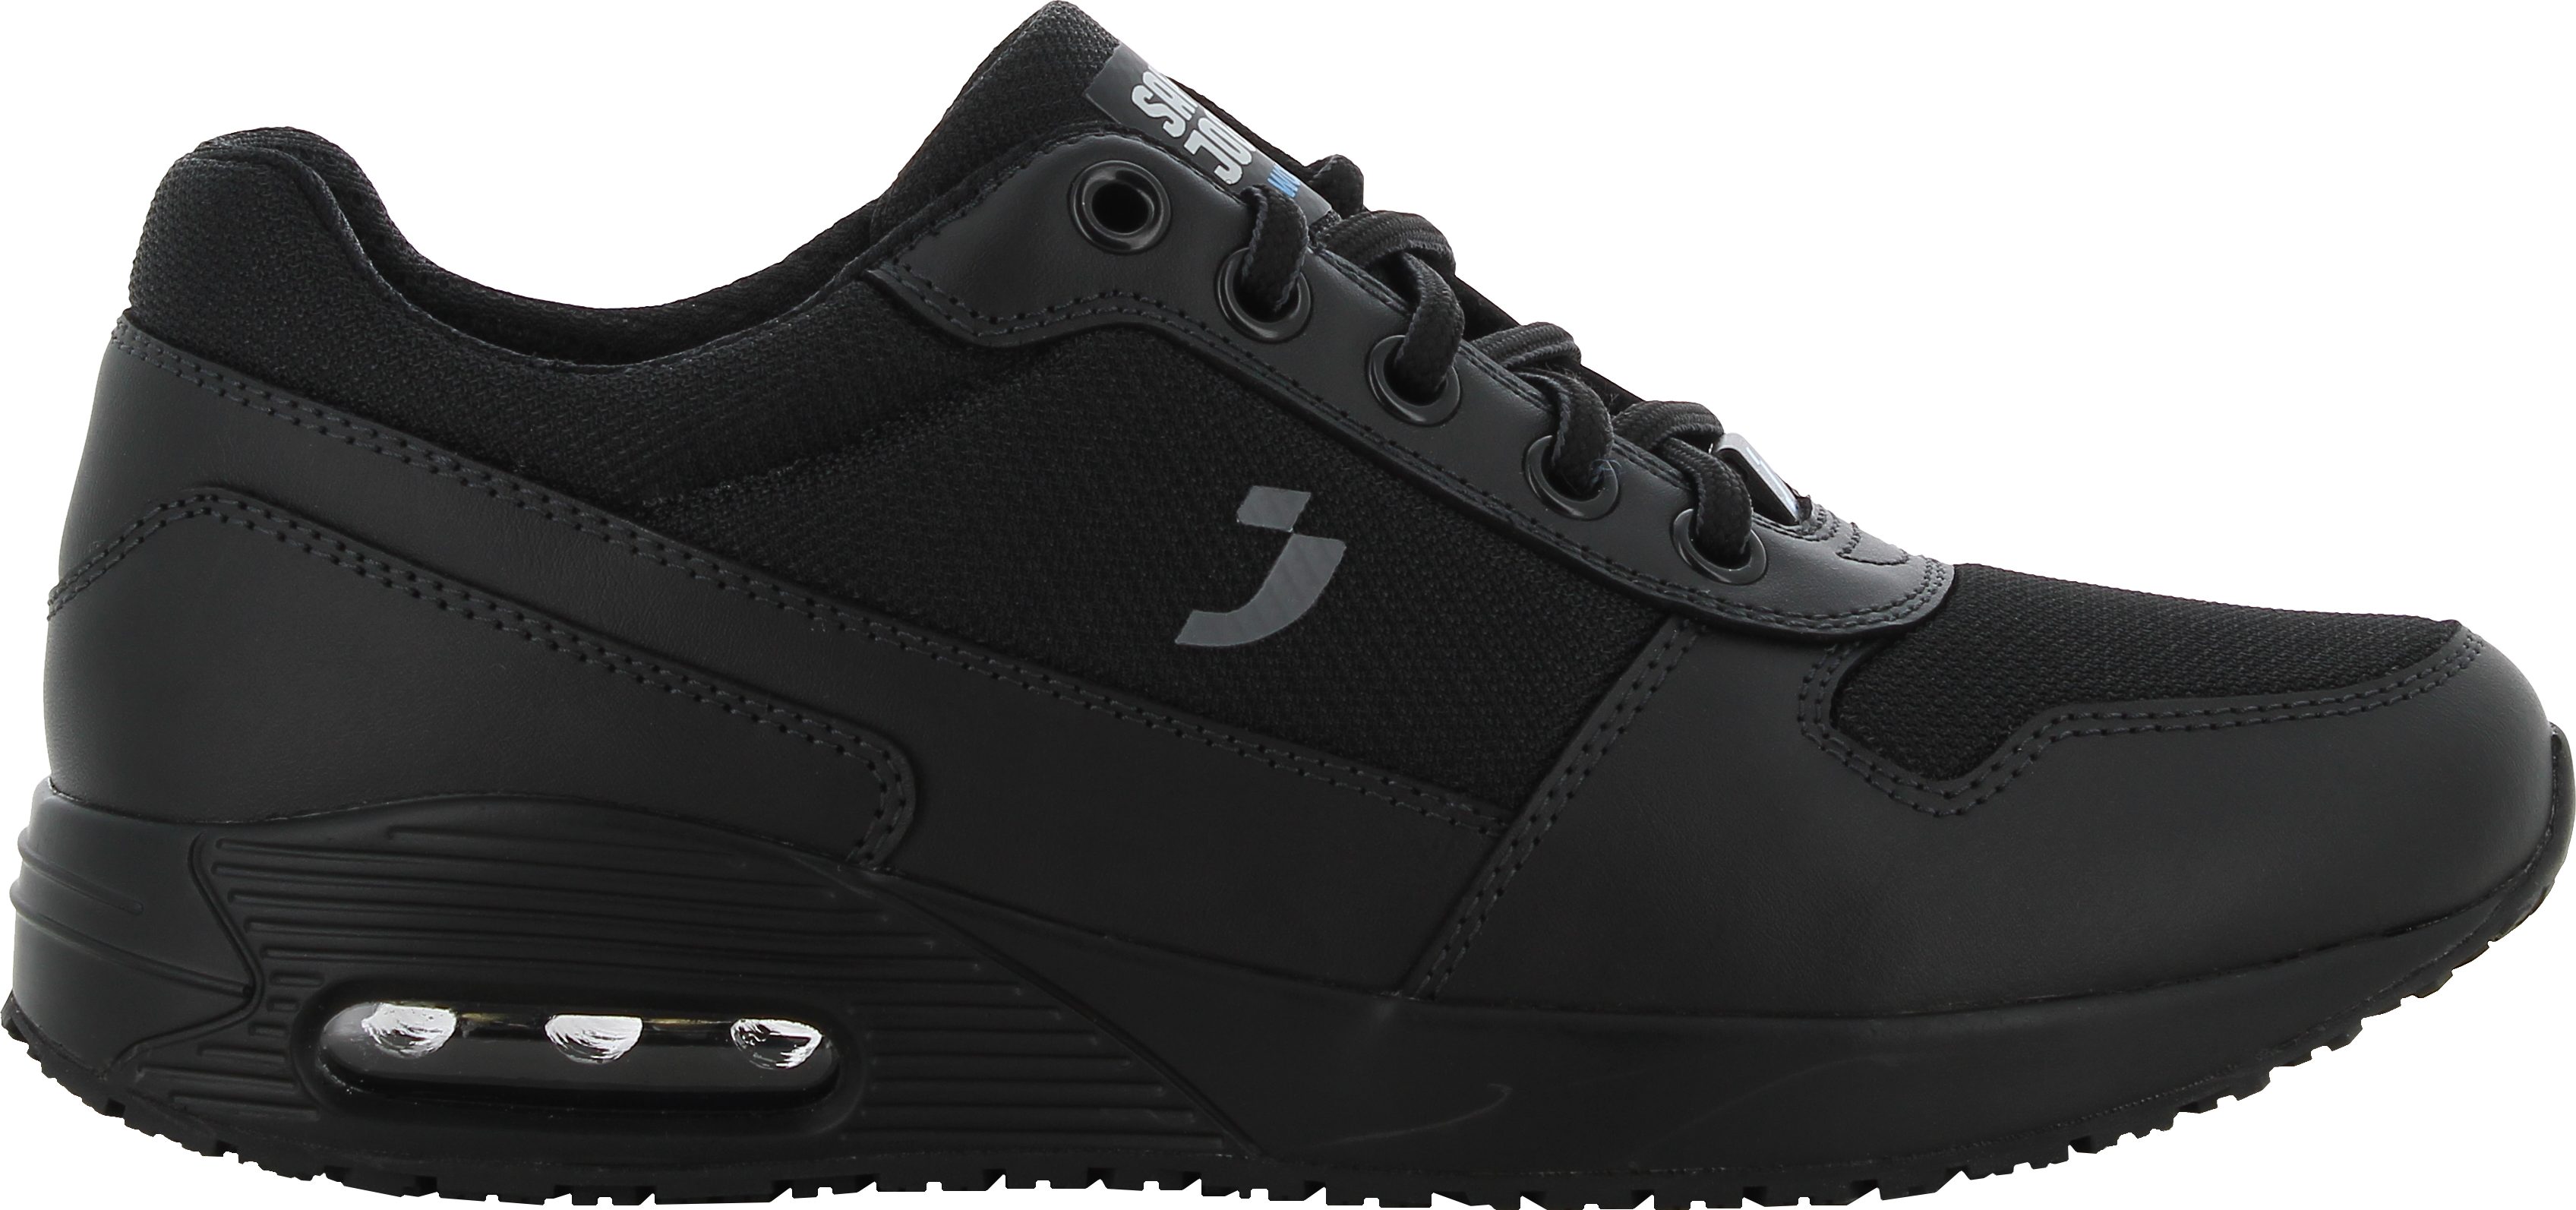 DOMINIQUE rutschfest Jogger Sneaker O1 Safety